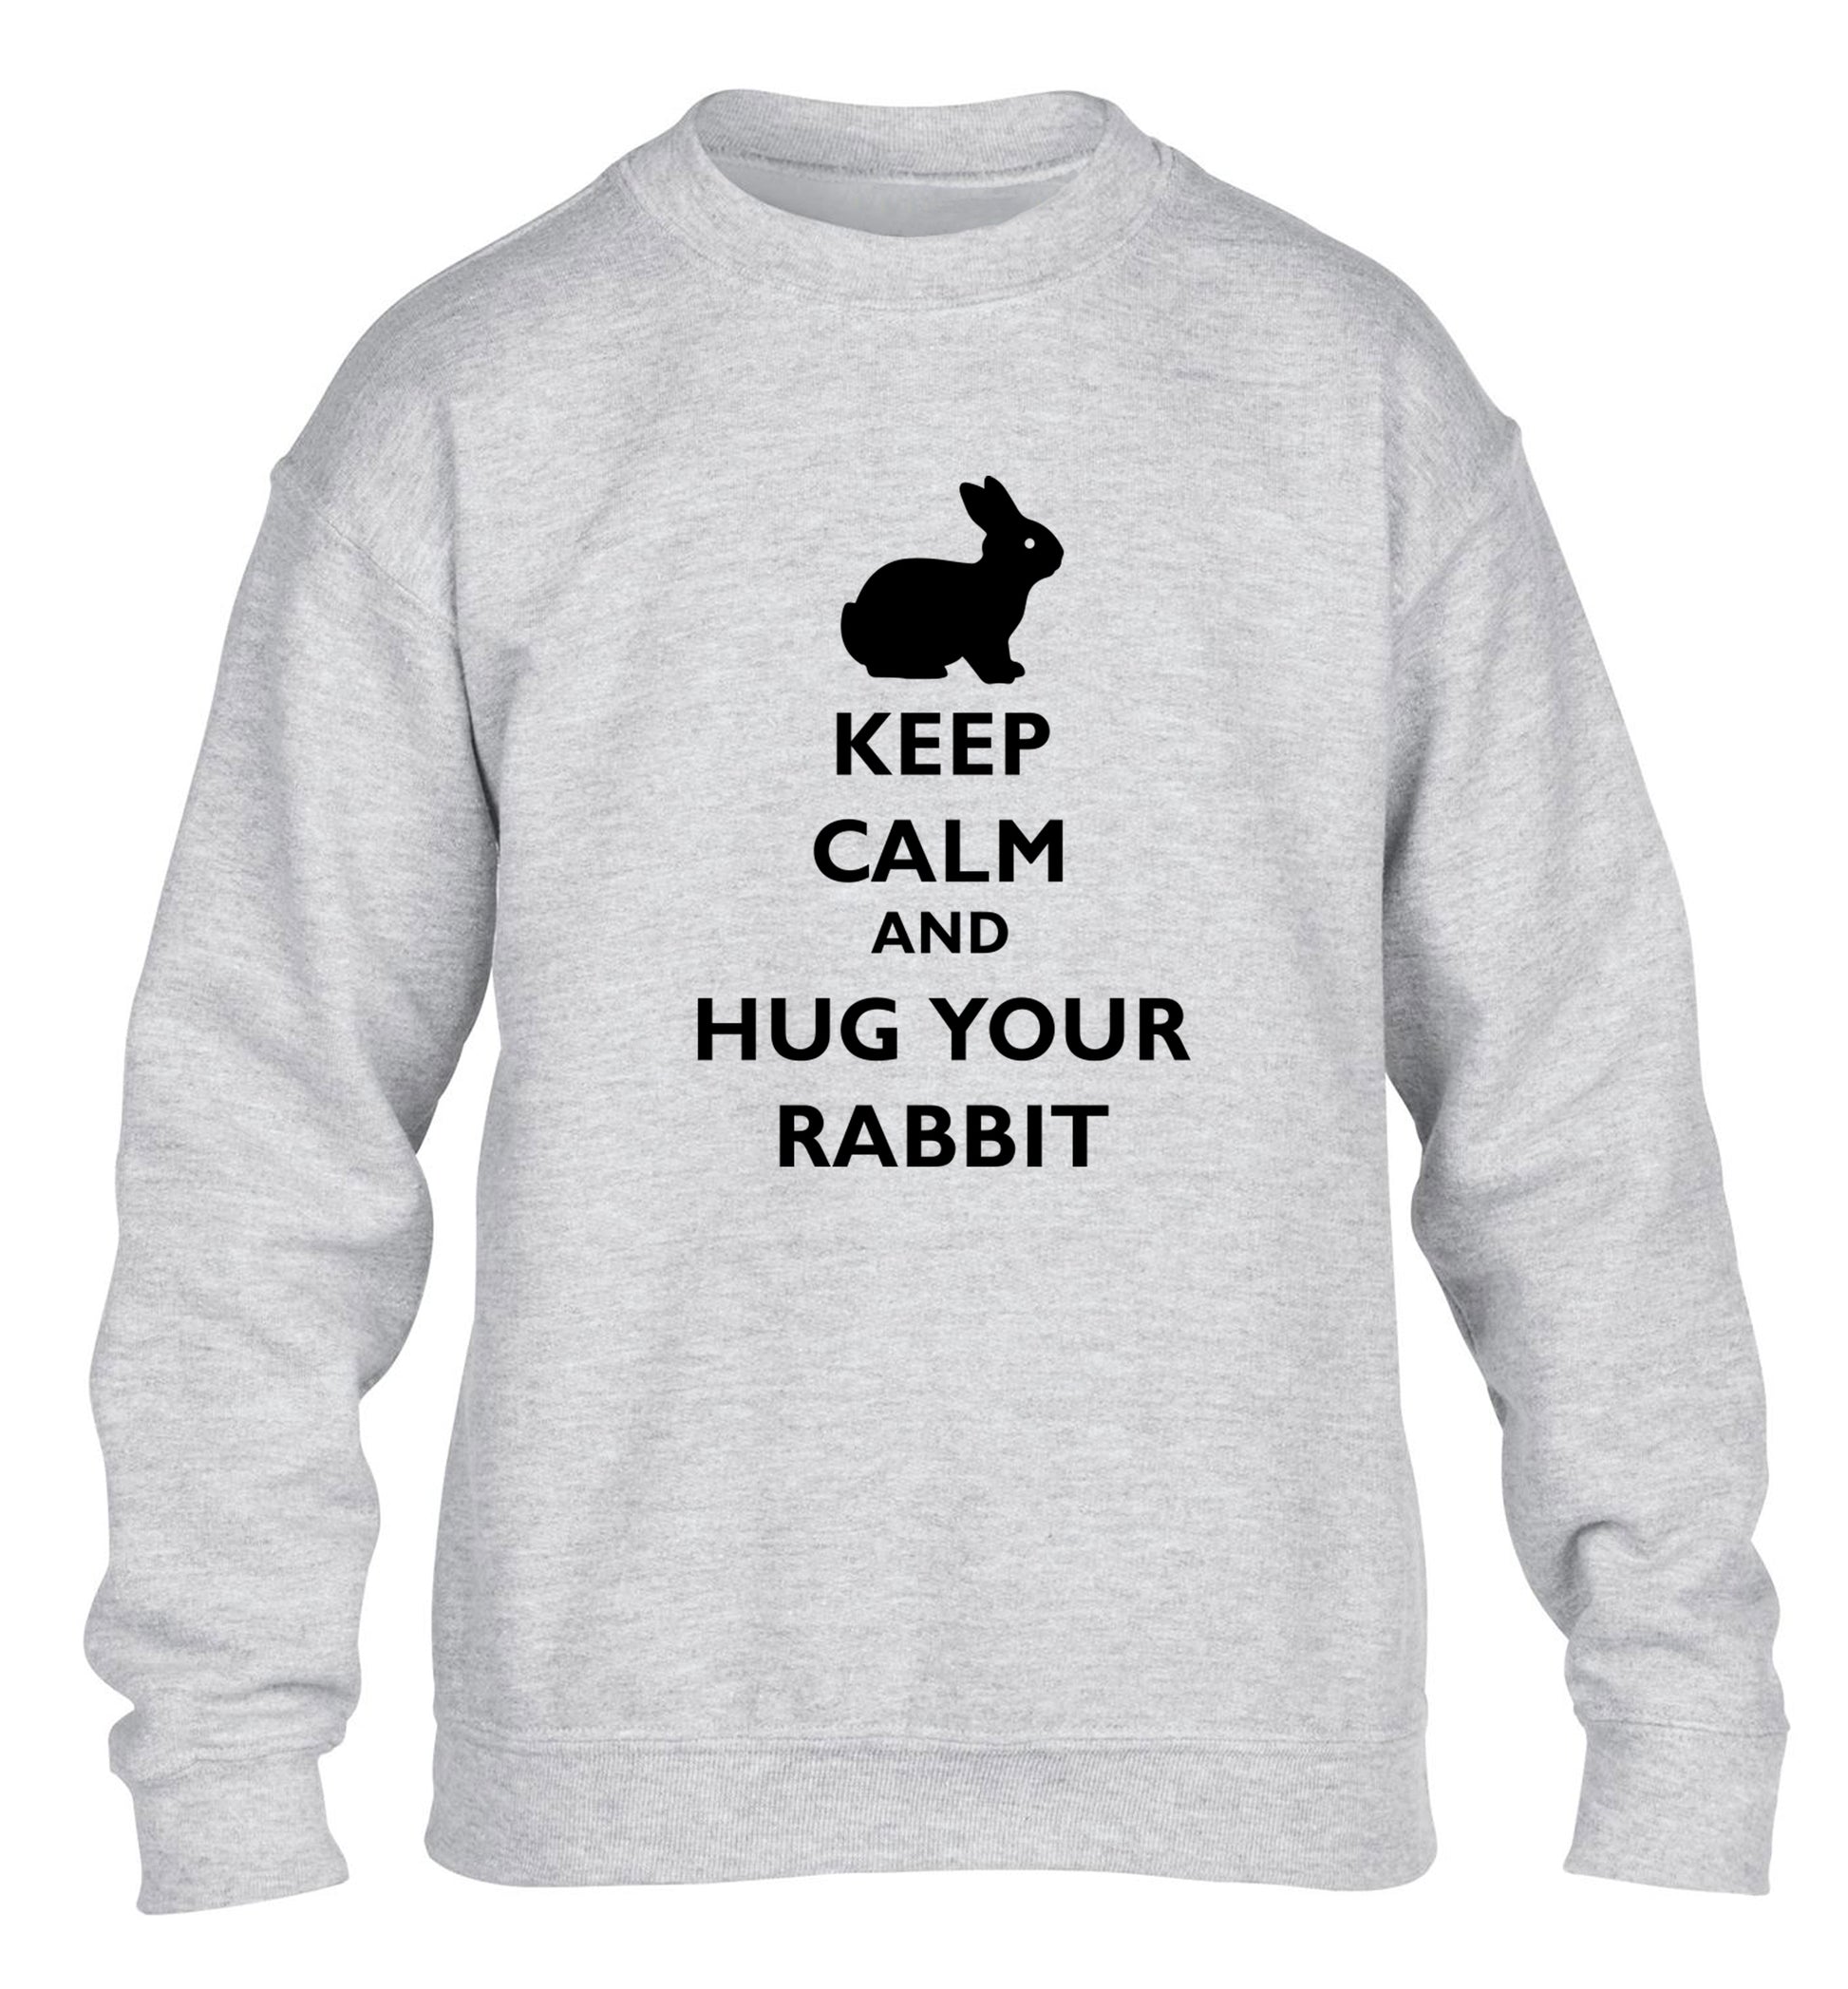 Keep calm and hug your rabbit children's grey sweater 12-13 Years